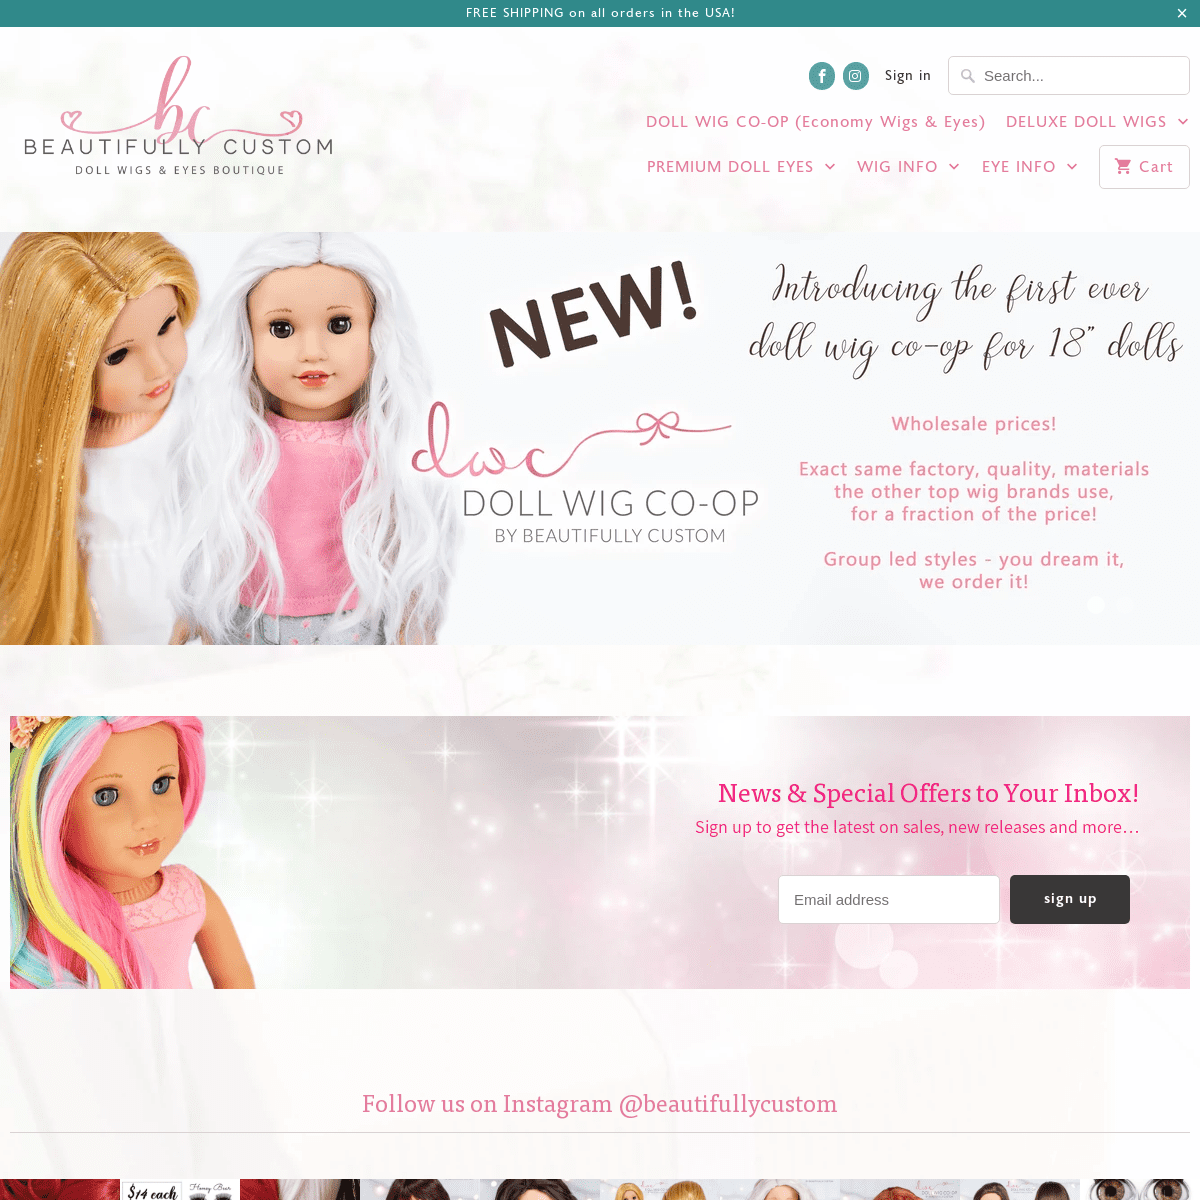 Beautifully Custom: Doll Wigs & Eyes Boutique